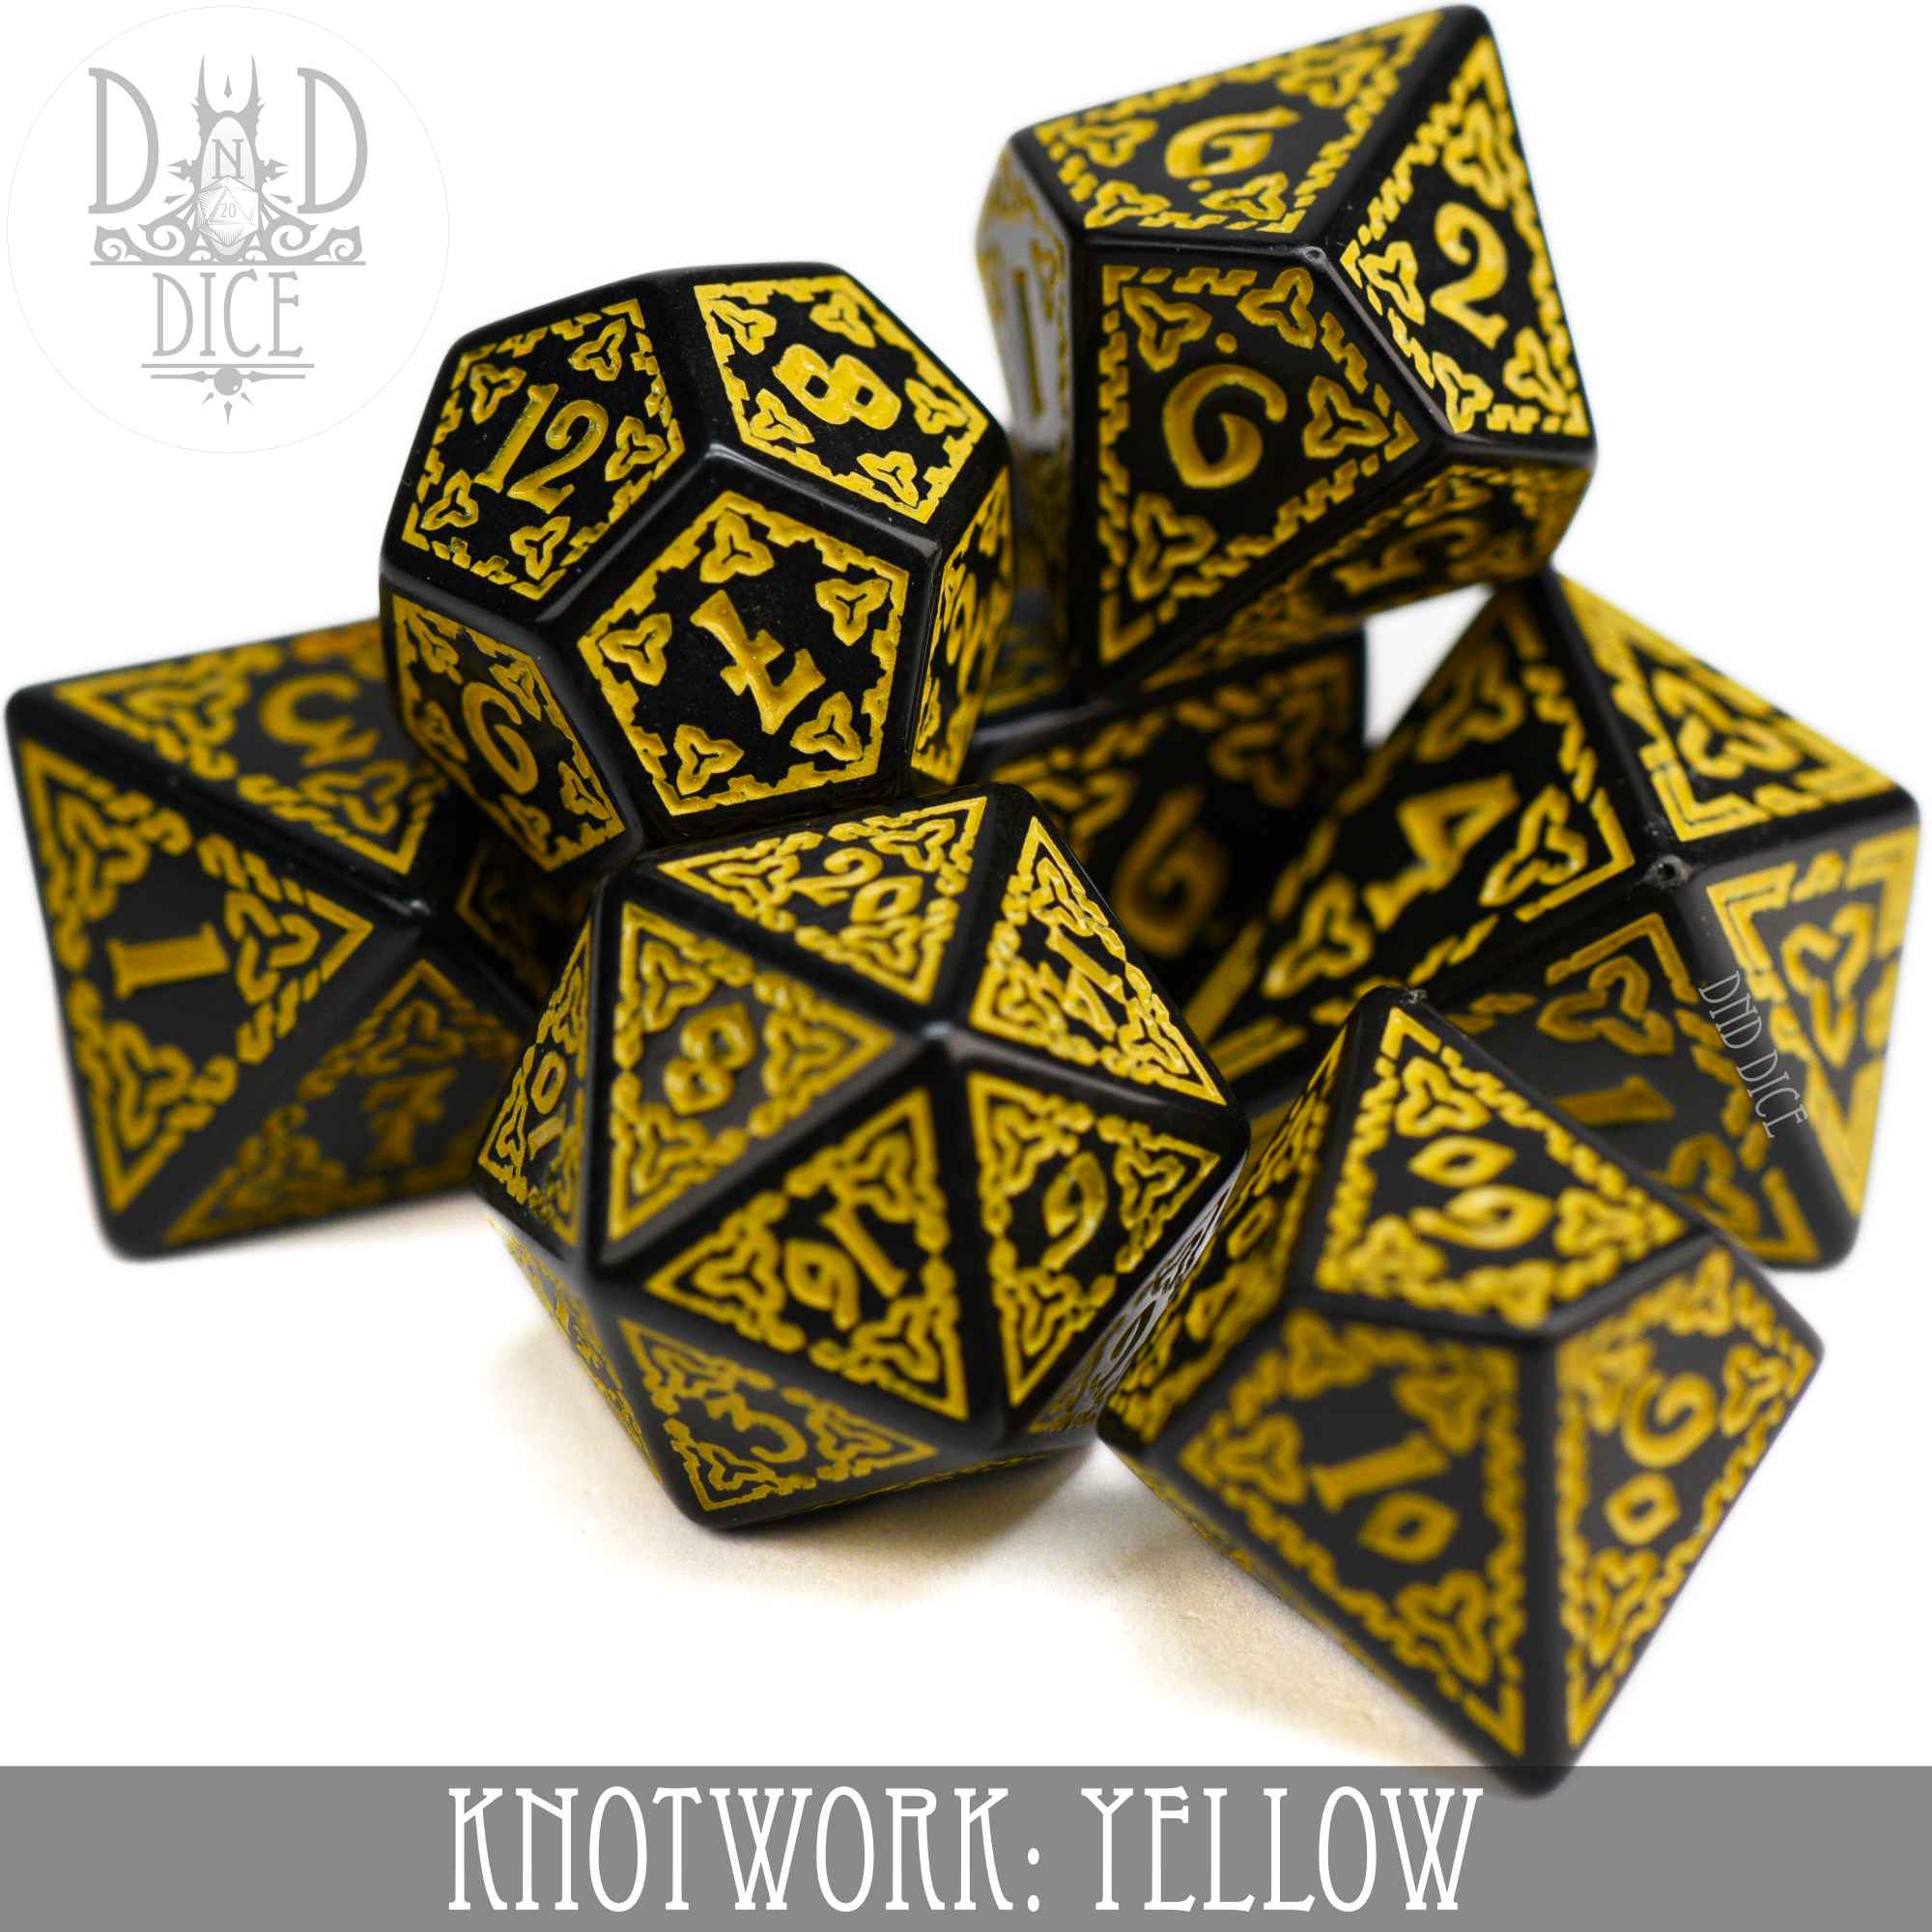 Knotwork: Yellow Dice Set